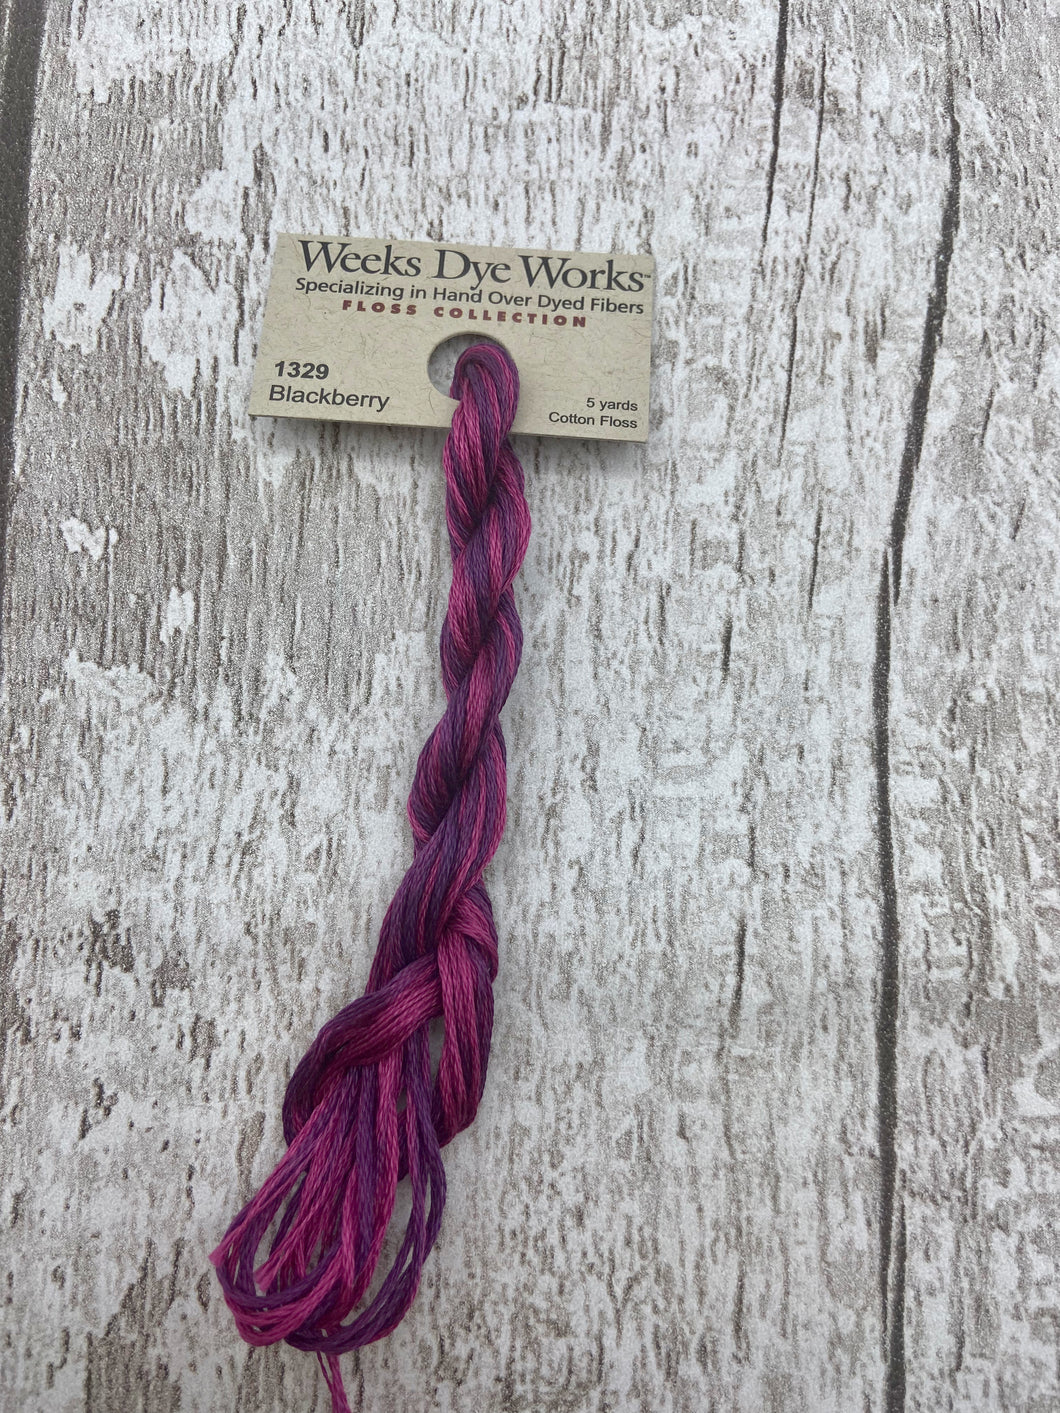 Blackberry (#1329) Weeks Dye Works 6-strand cotton floss